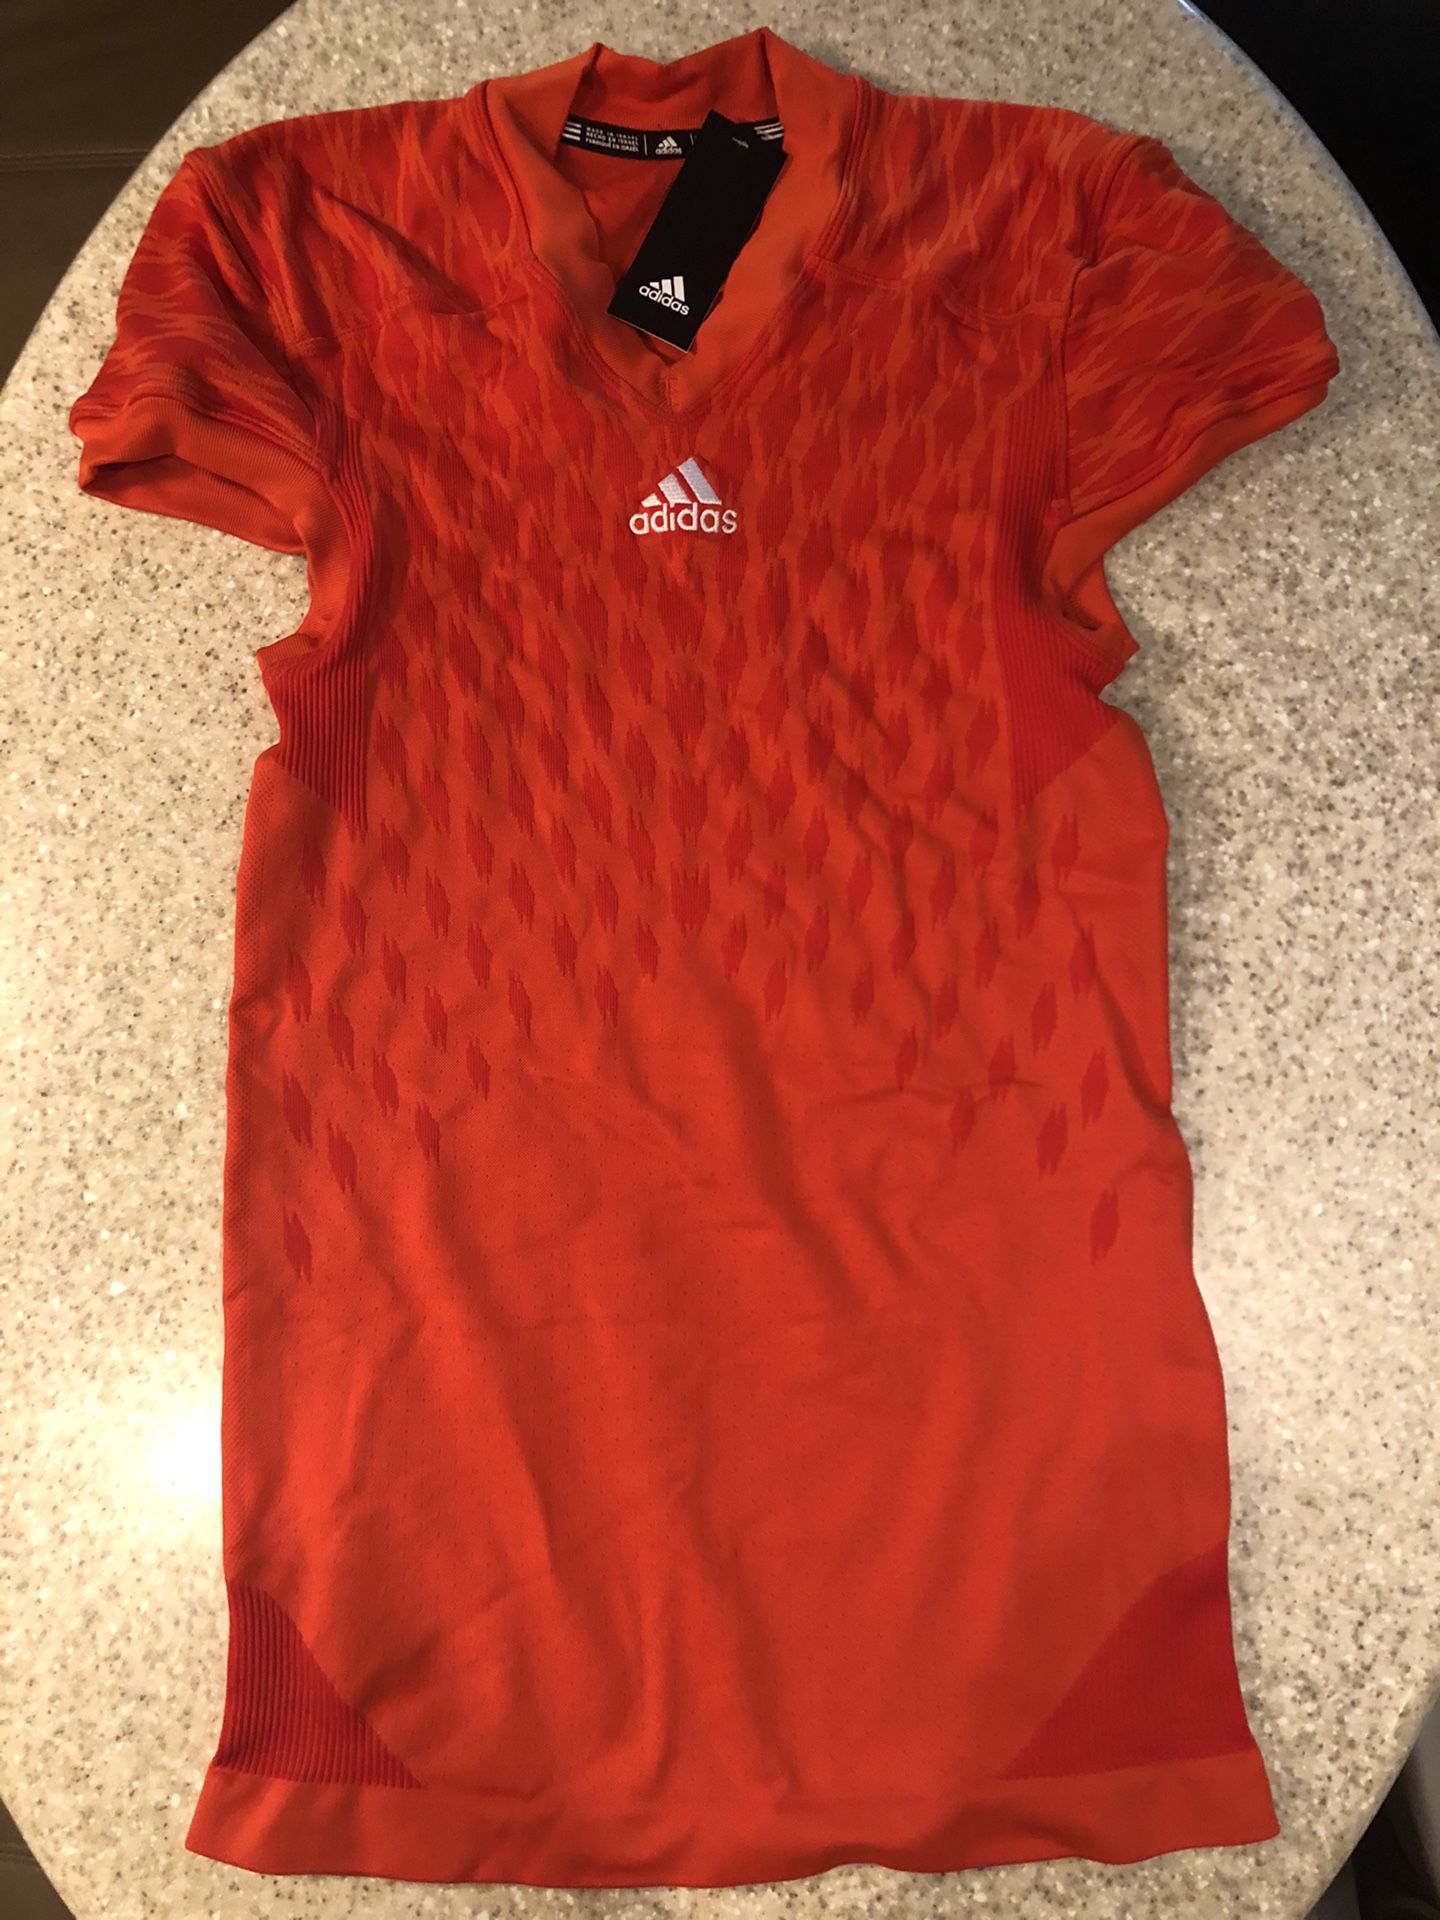 Adidas Jersey Orange